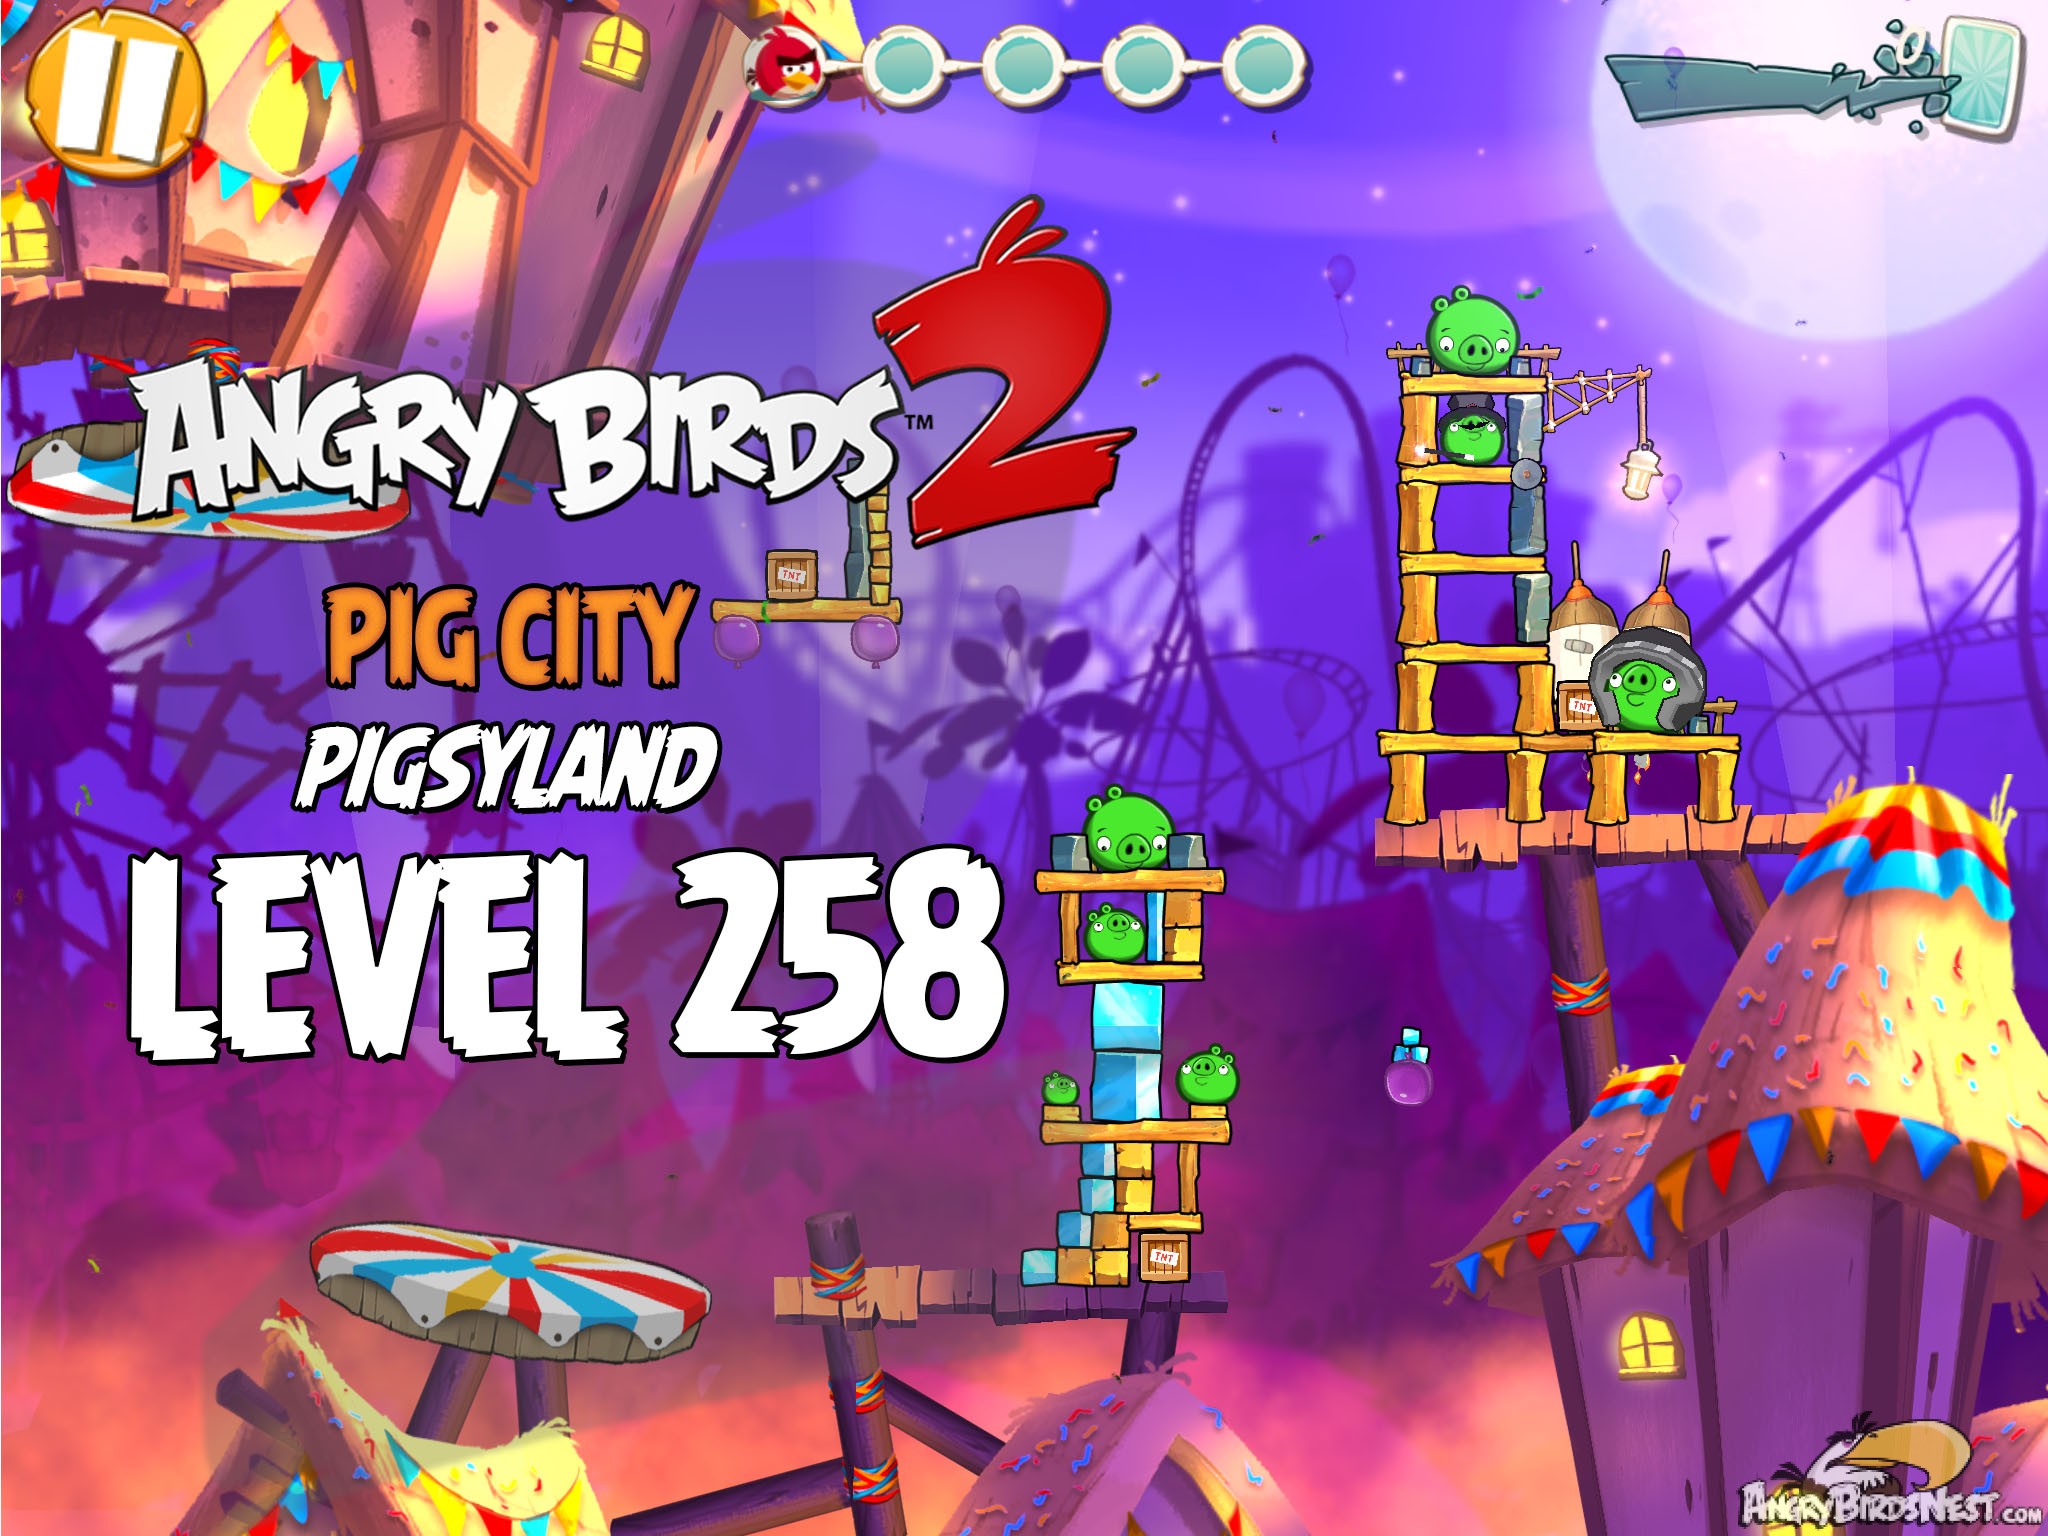 Angry Birds 2 Pig City Pigsyland Level 258